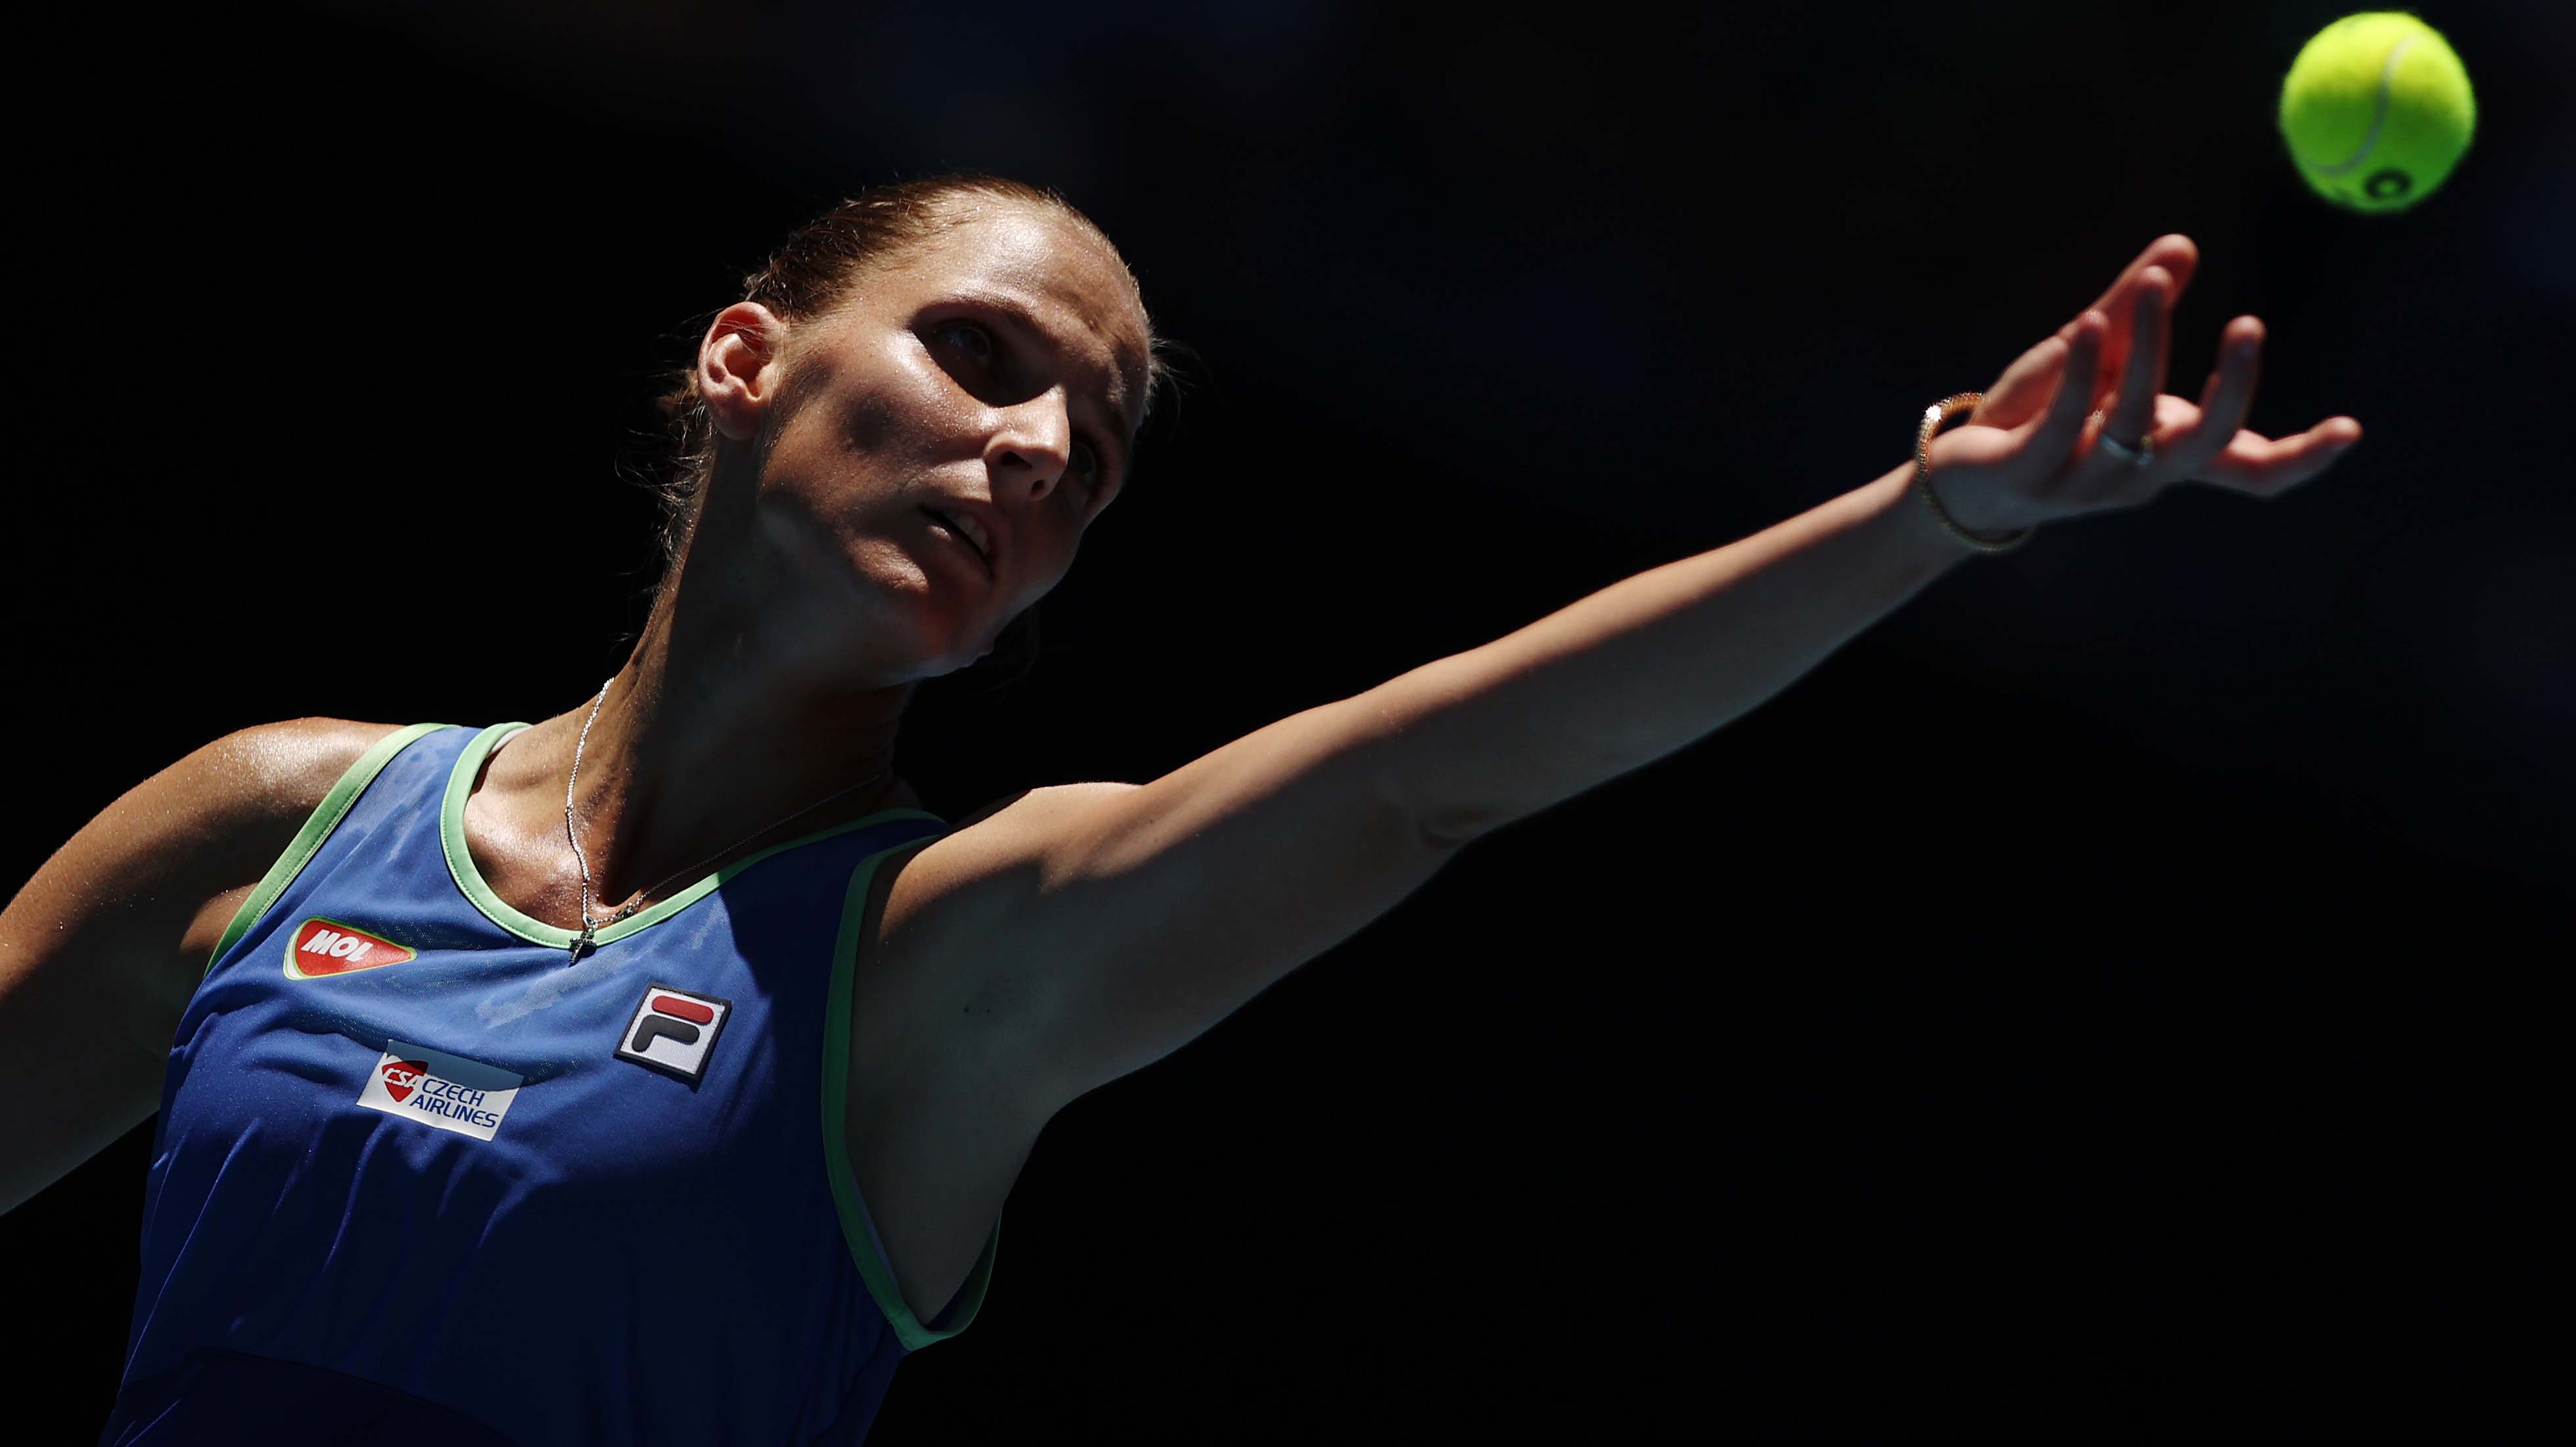 World number two Karolina Plyskova knocked out of Australian Open